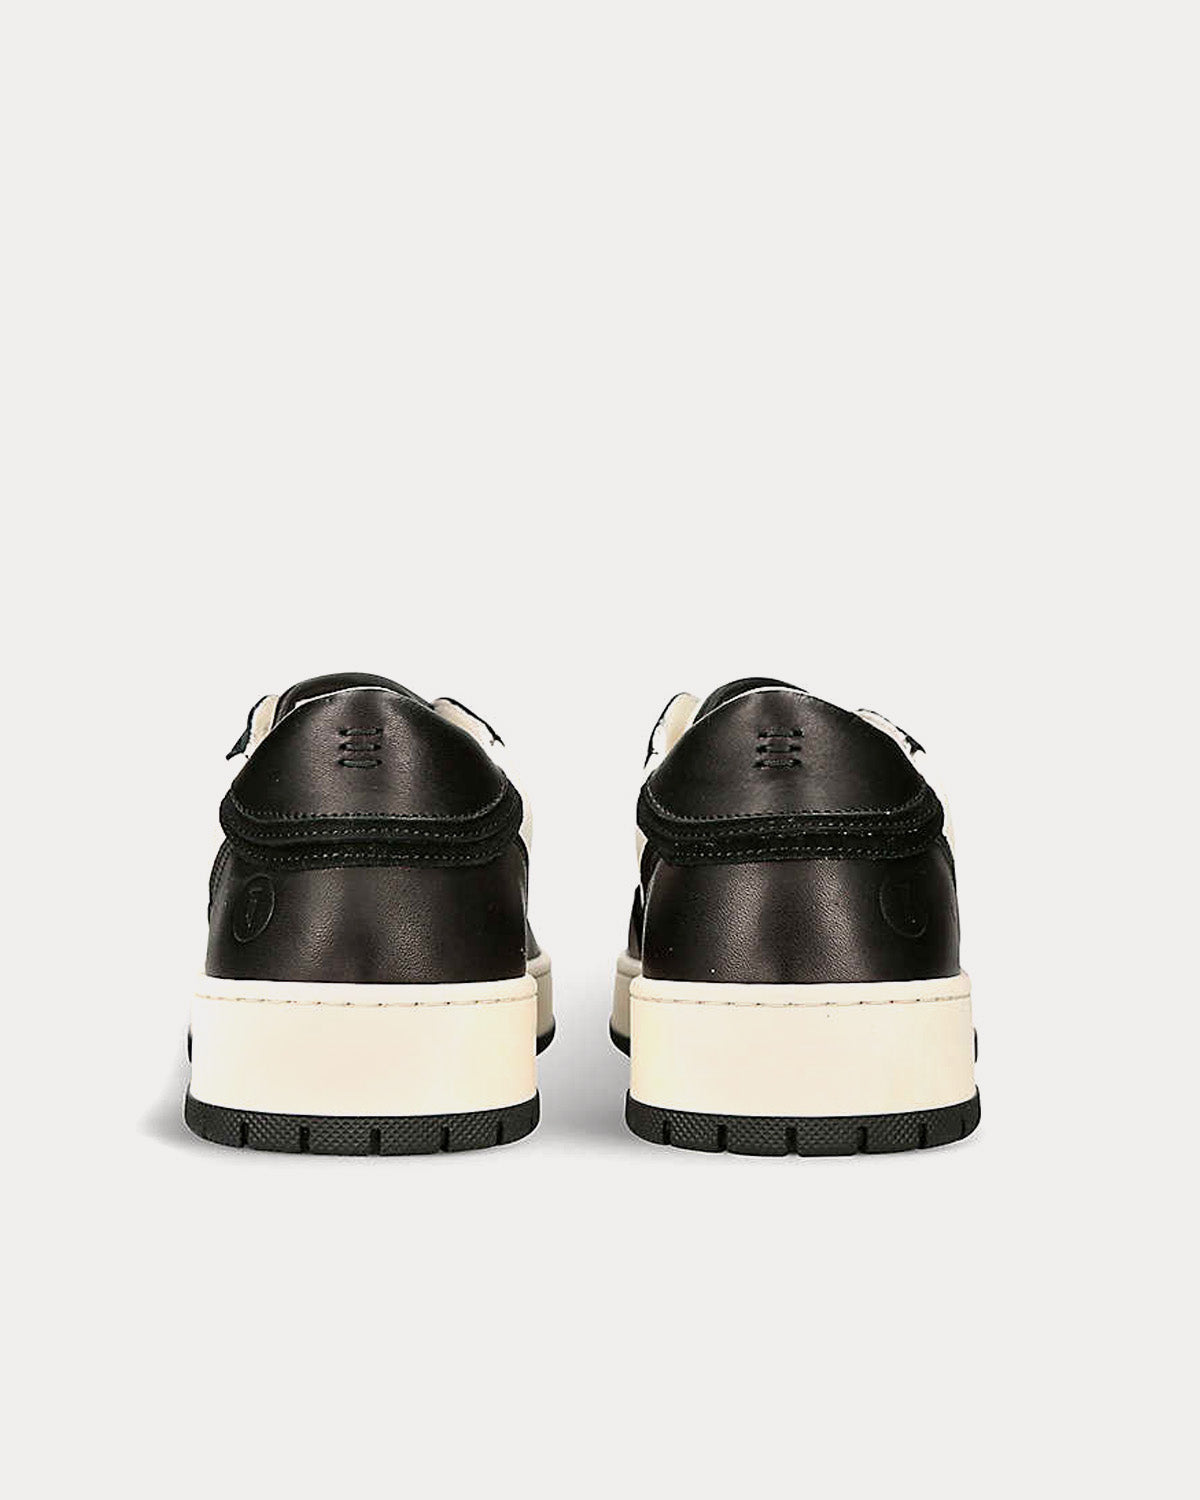 Collegium - Alpha Leather & Suede Black / White Low Top Sneakers